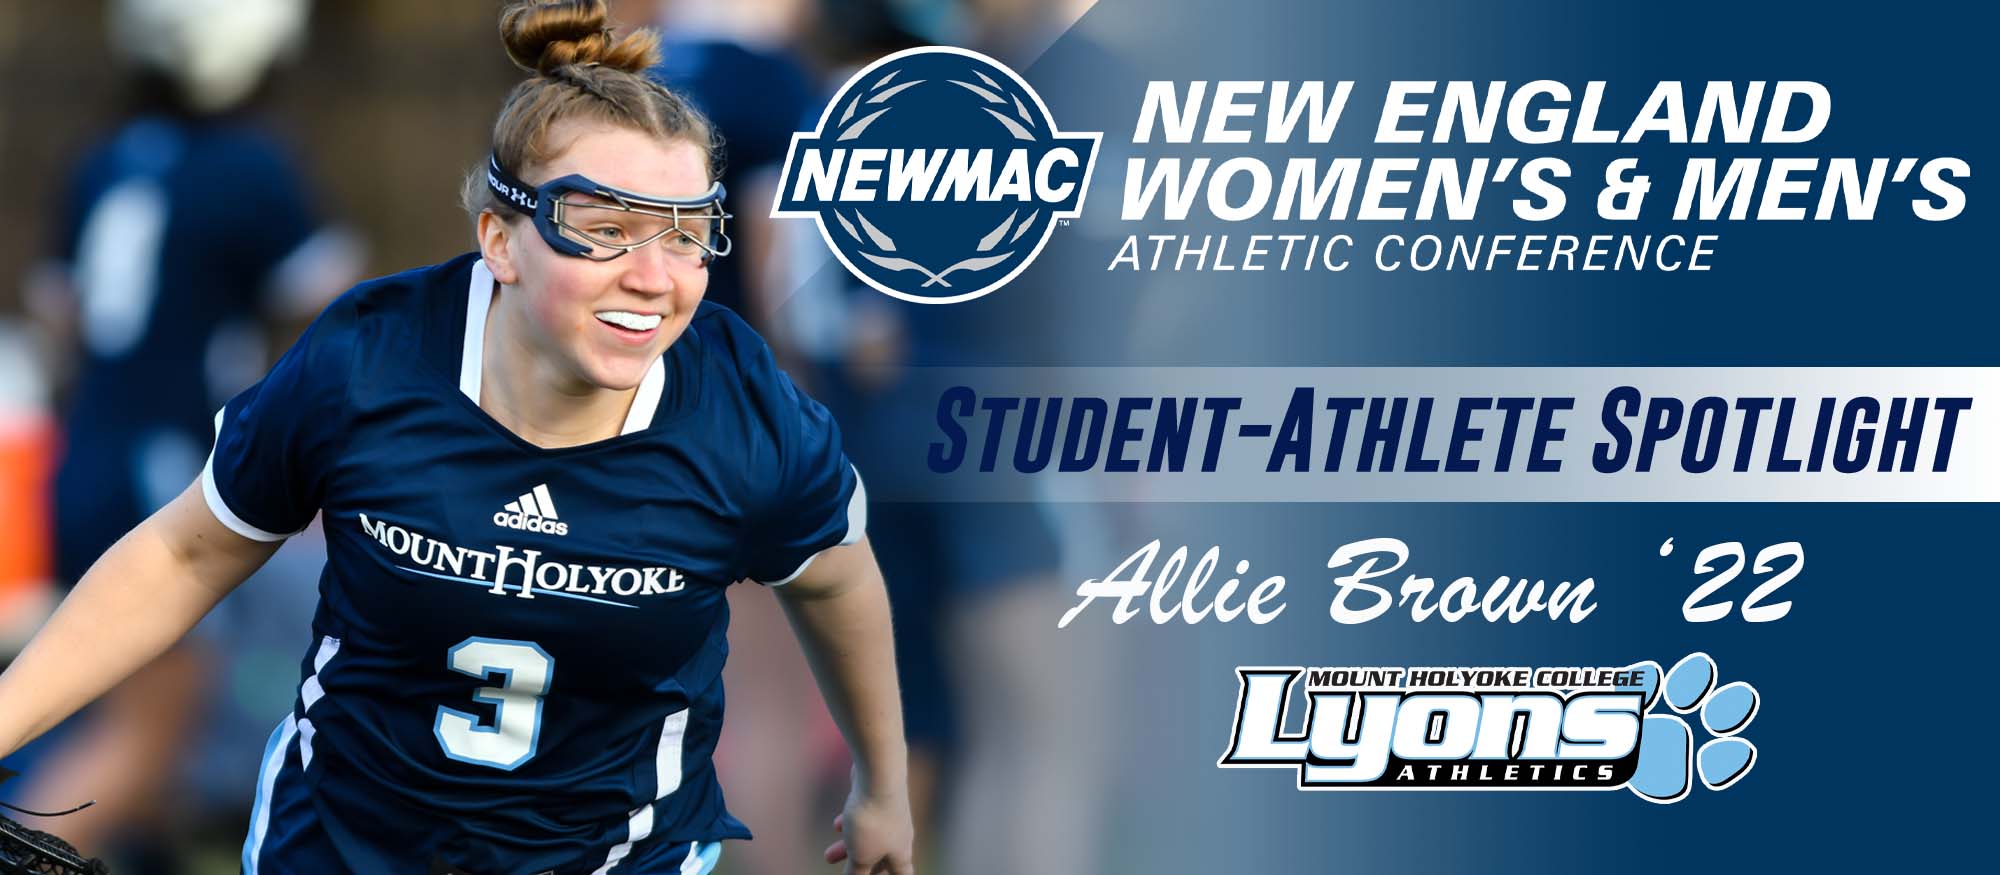 NEWMAC Student-Athlete Spotlight: Allie Brown '22, Lacrosse